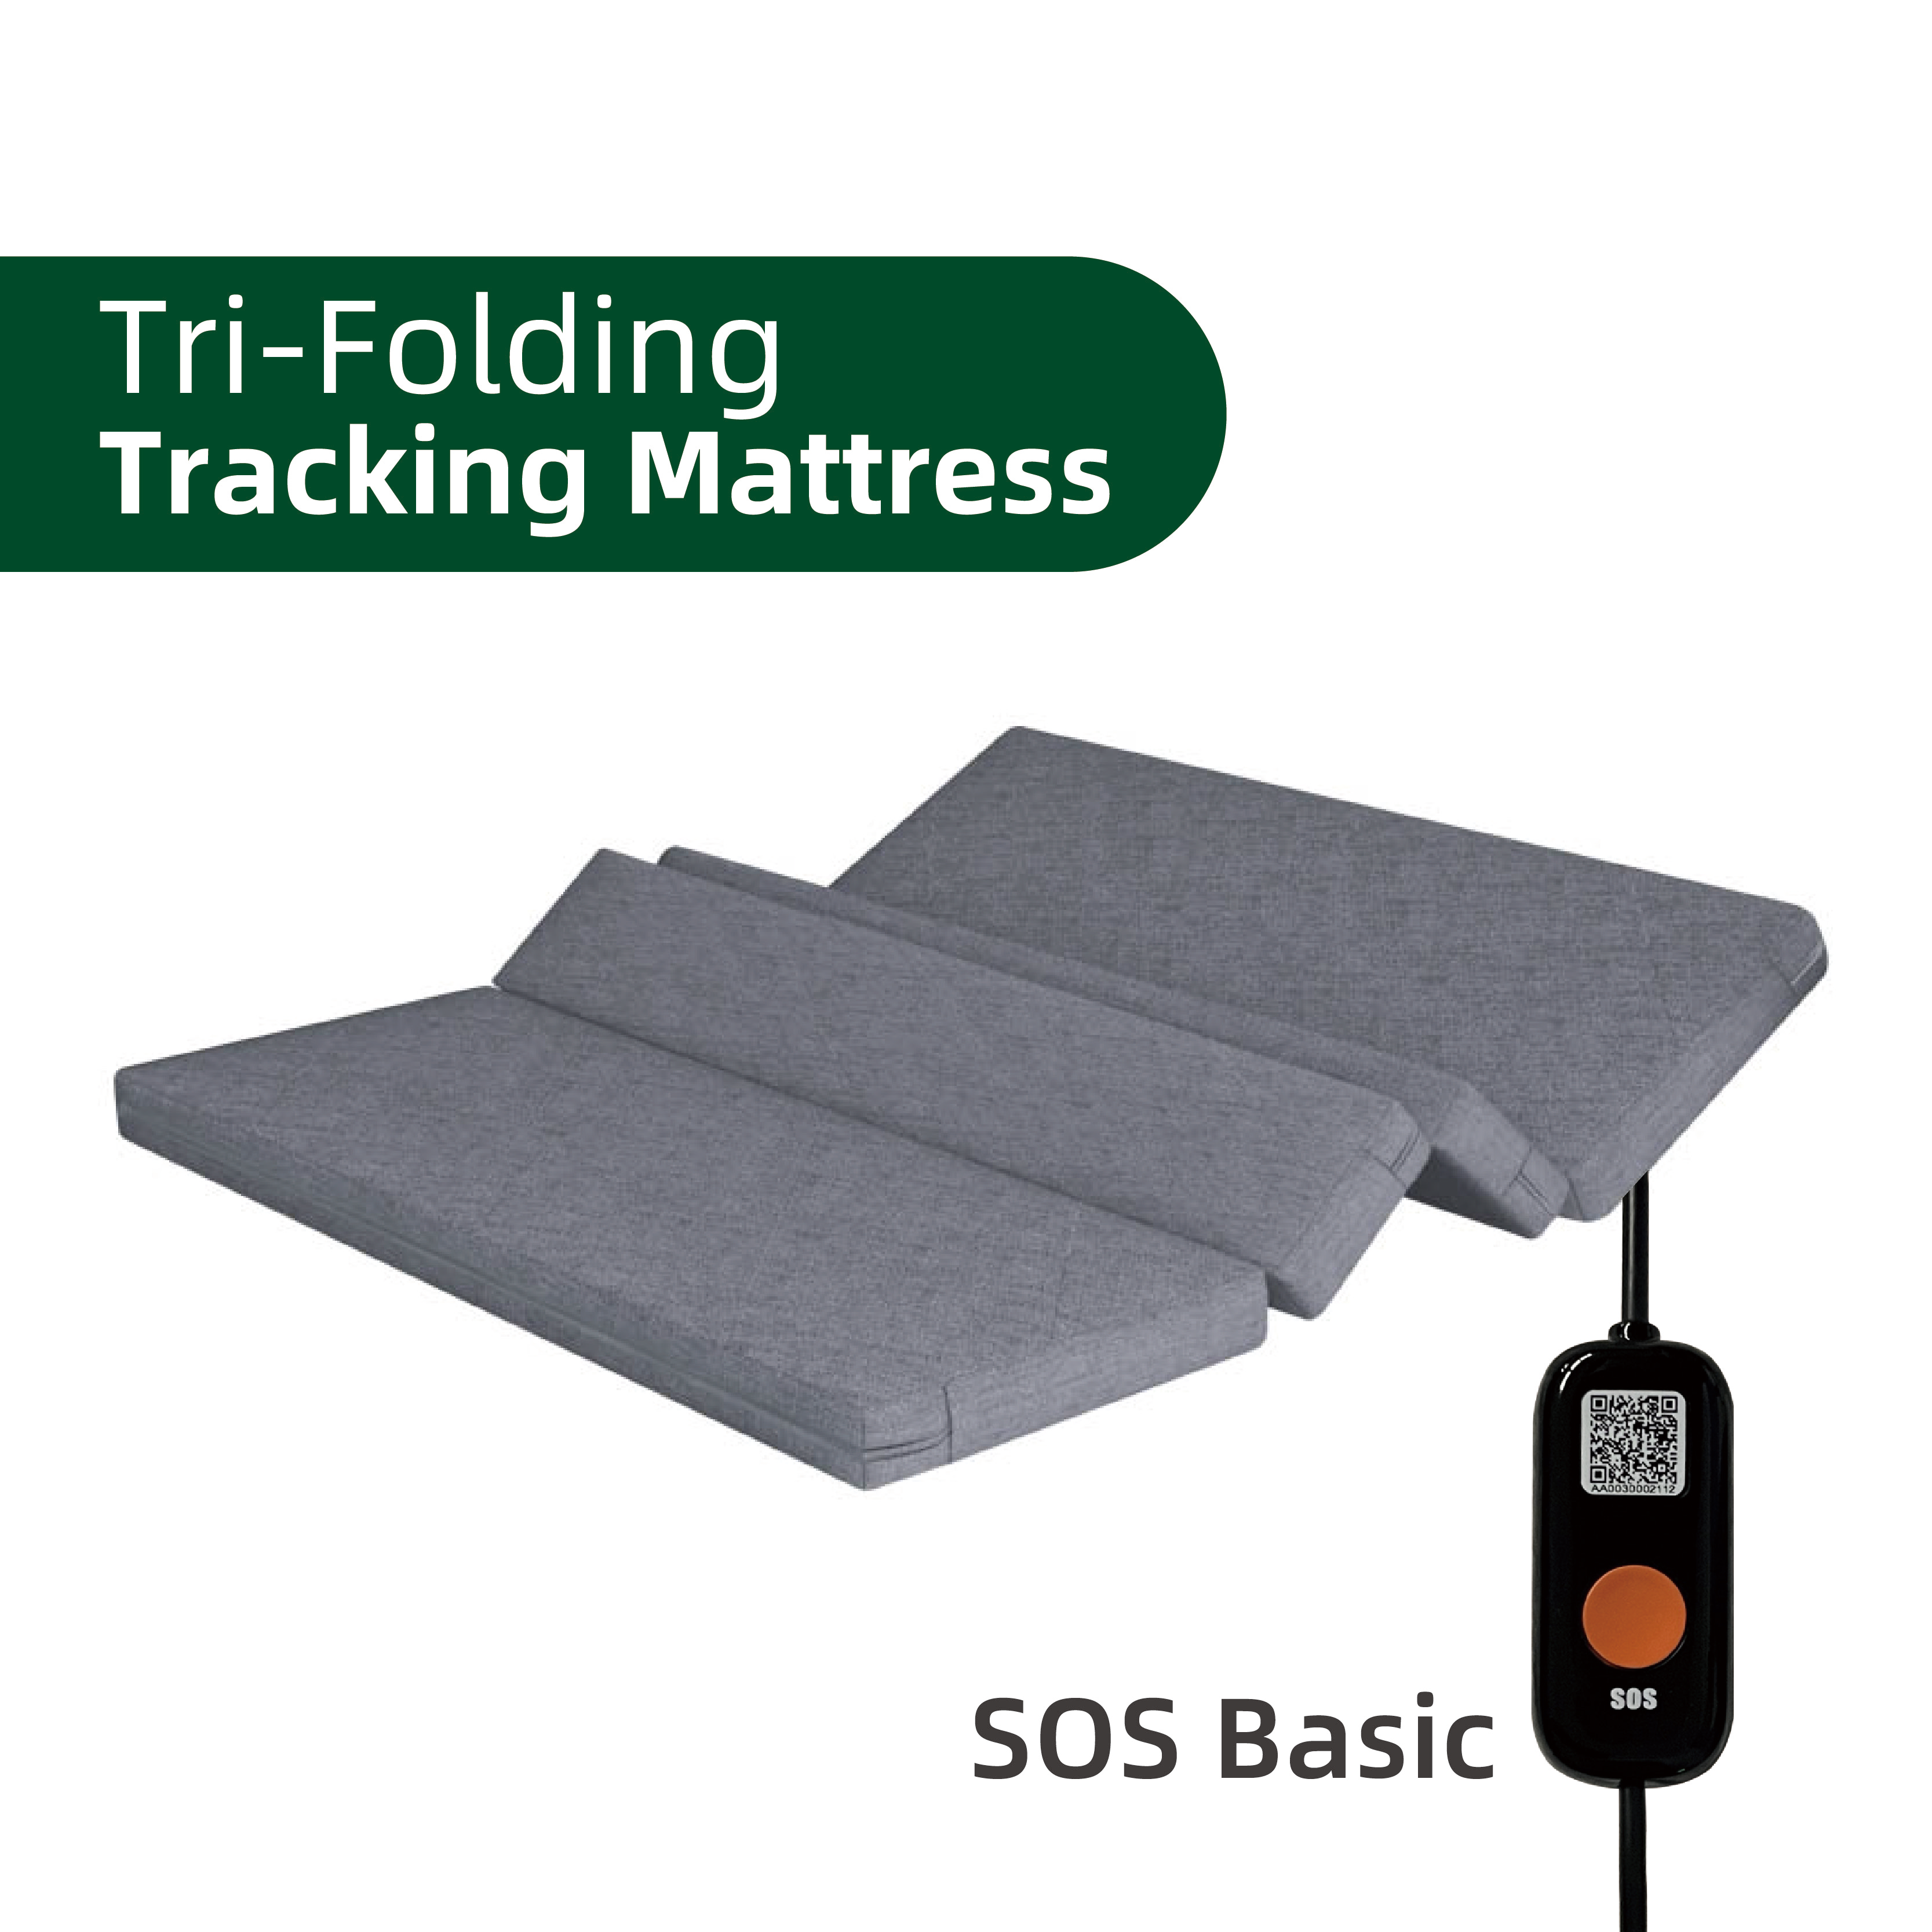 Tri-folding tracking mattress